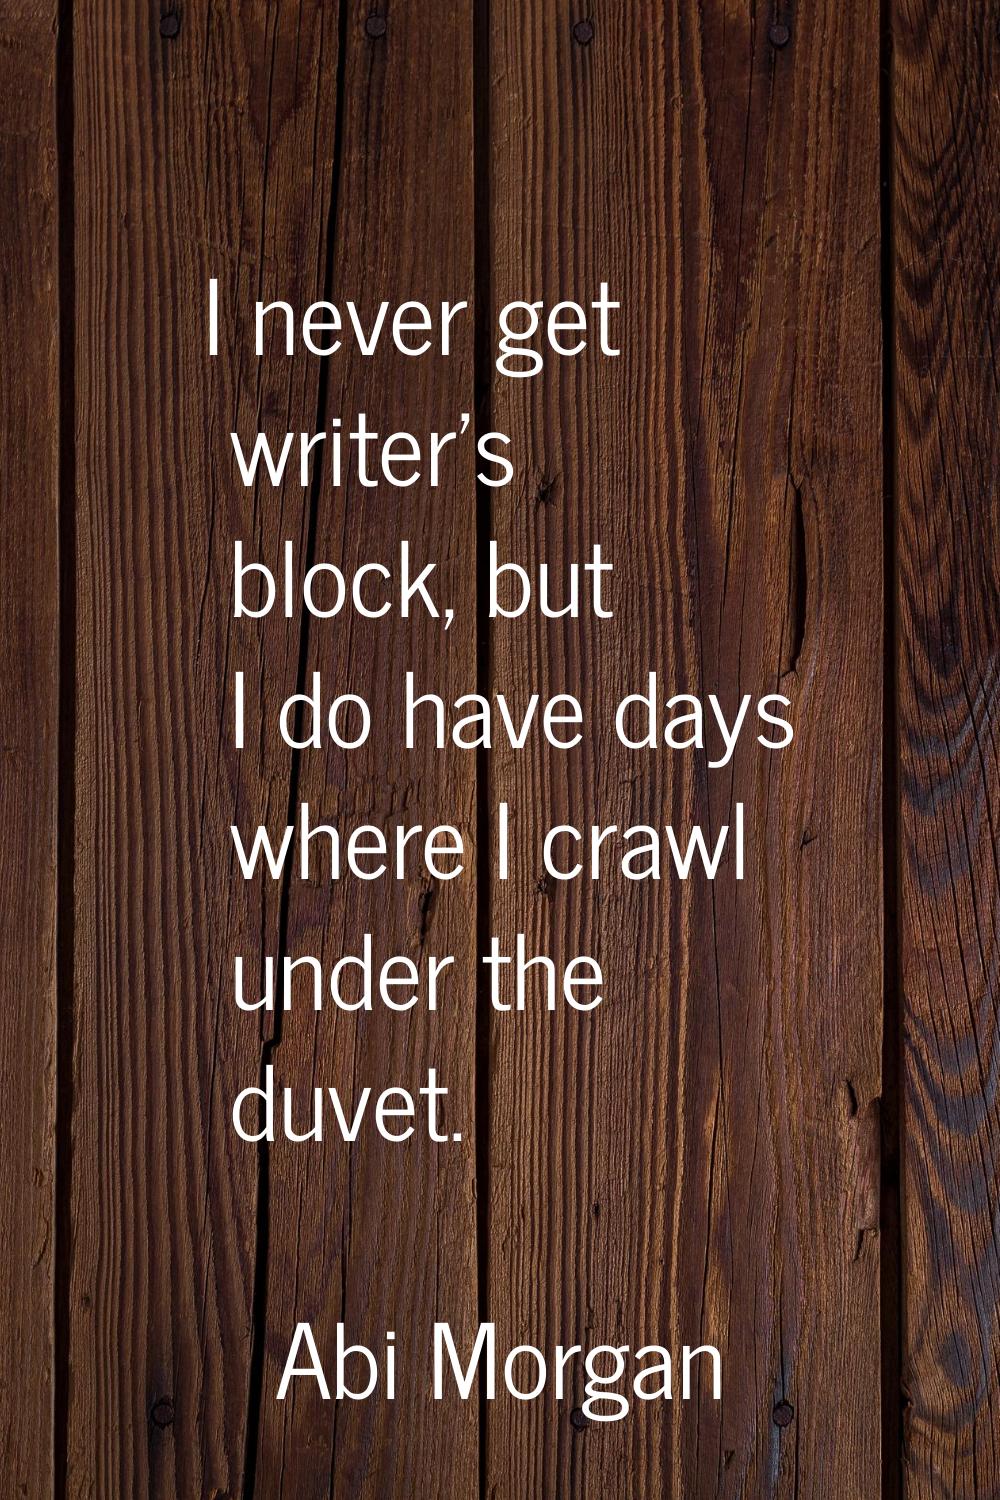 I never get writer's block, but I do have days where I crawl under the duvet.